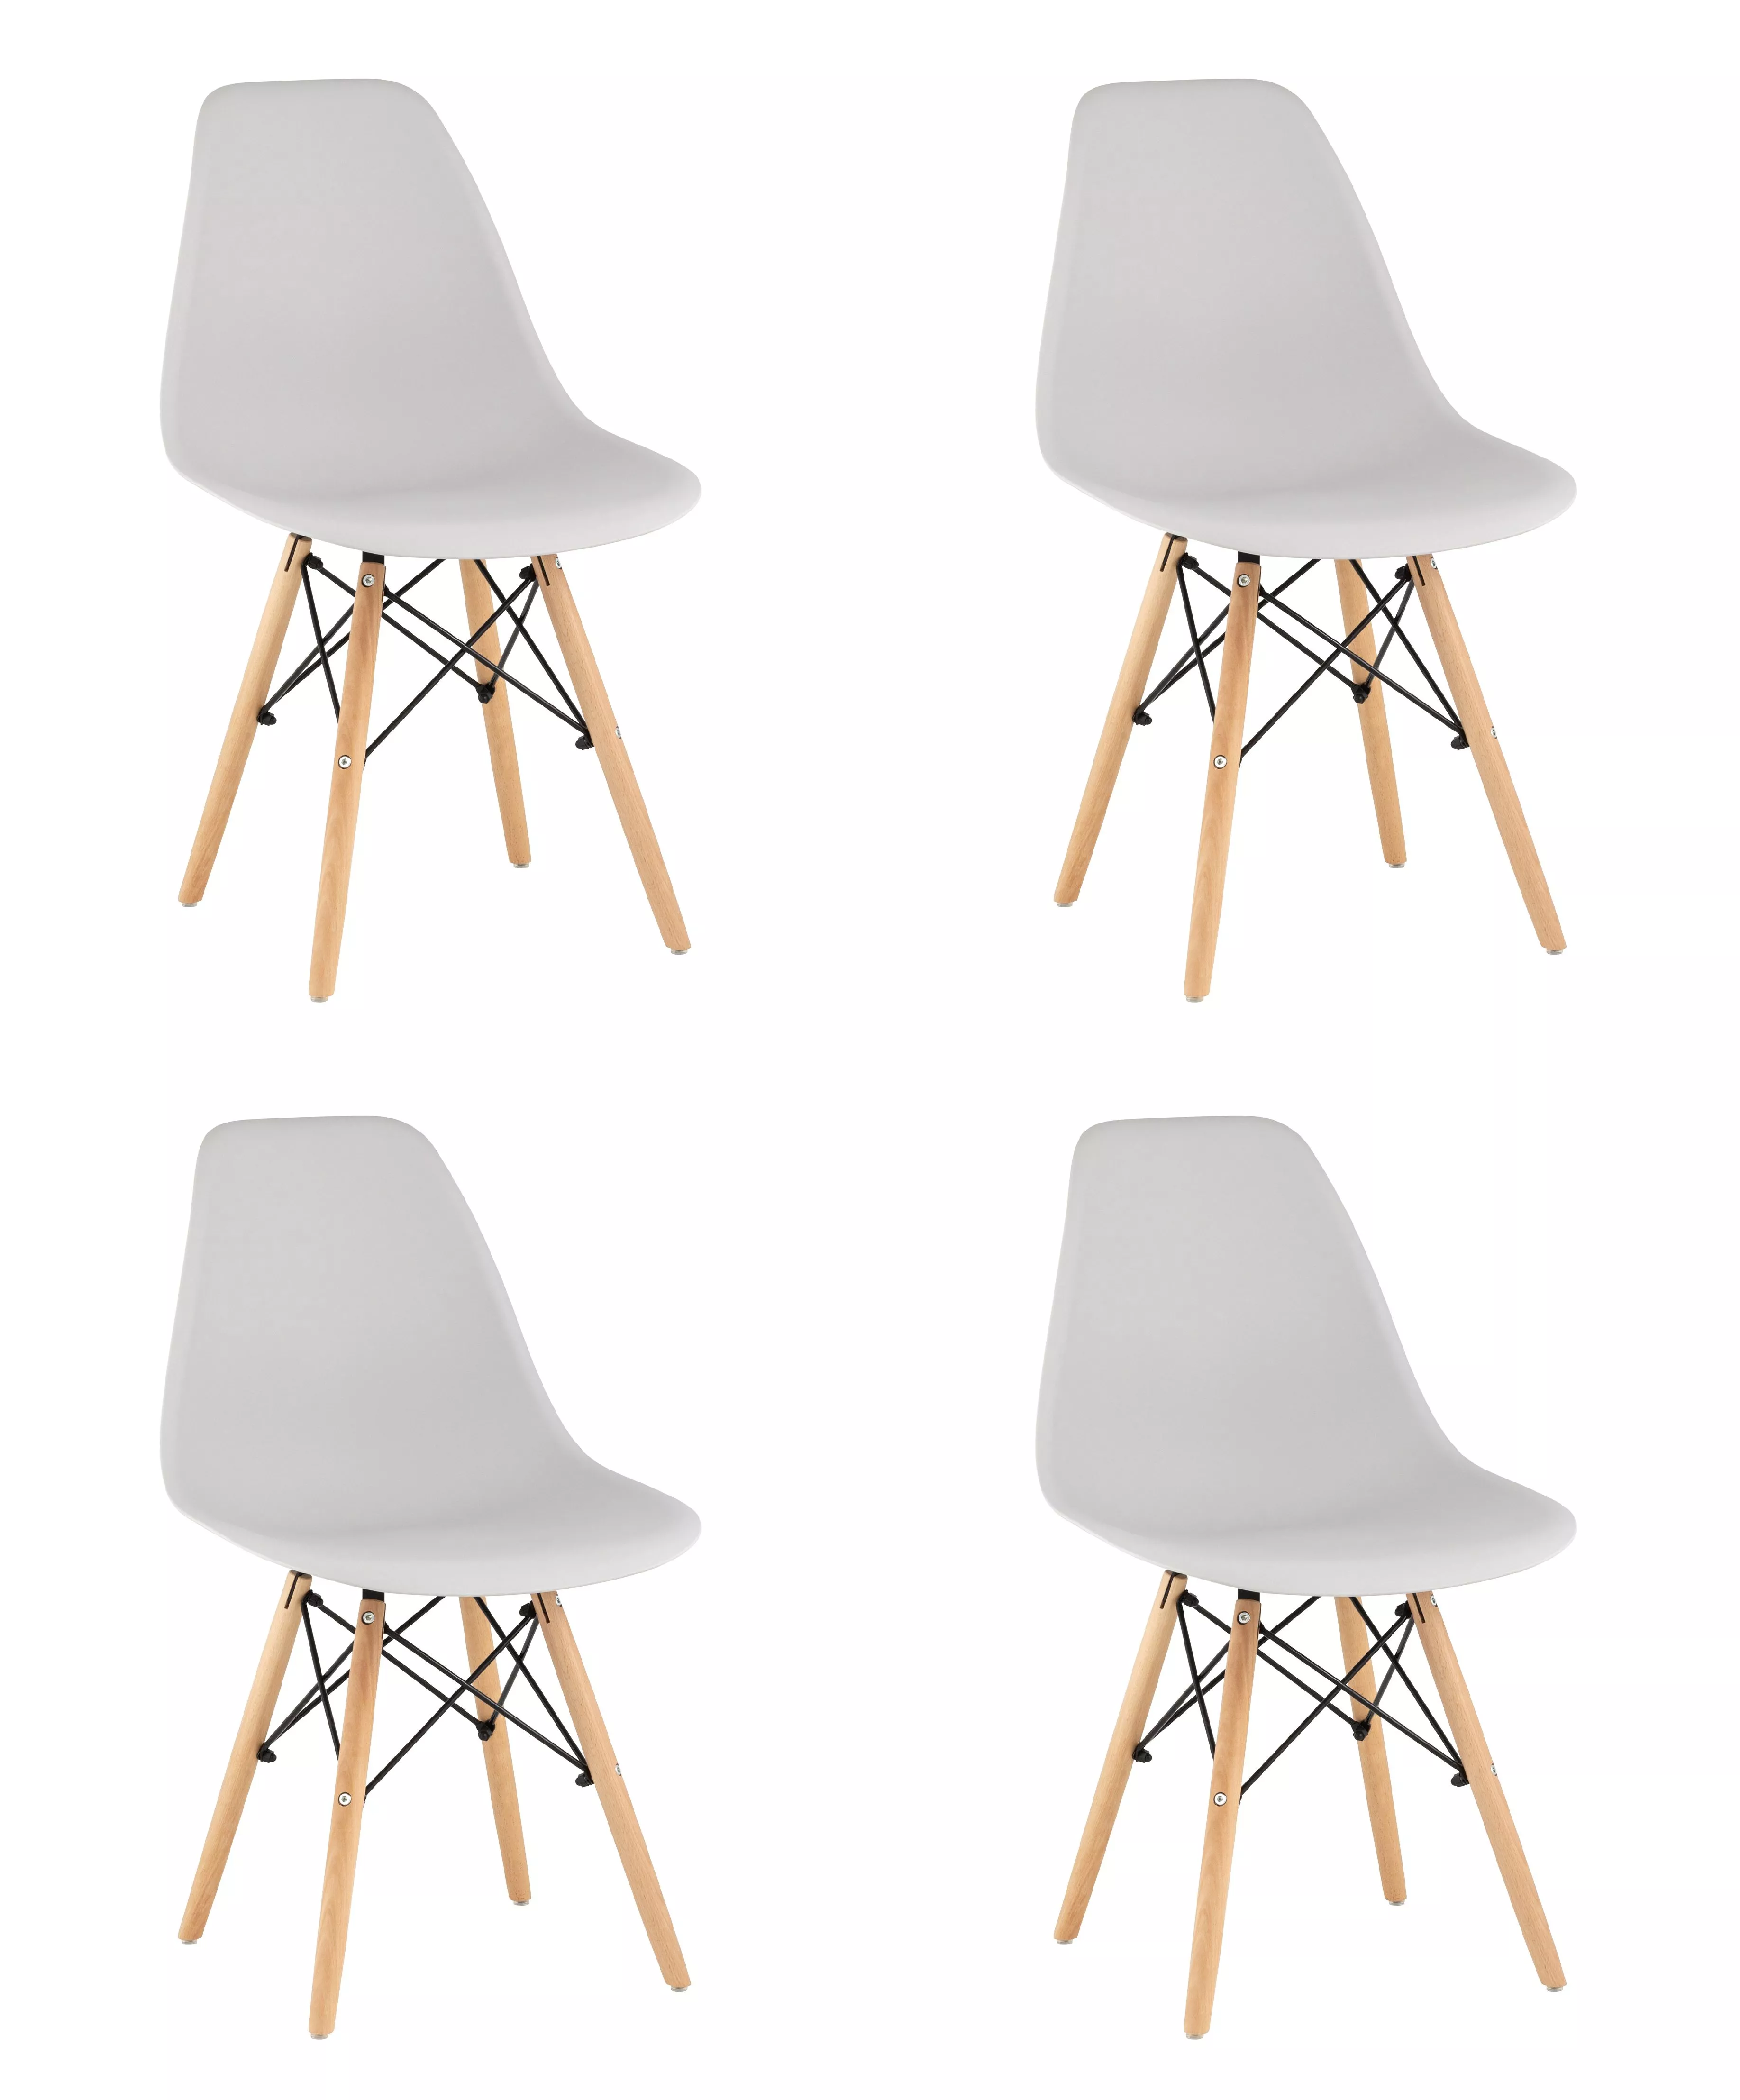 Комплект стульев Style DSW светло-серый x 4